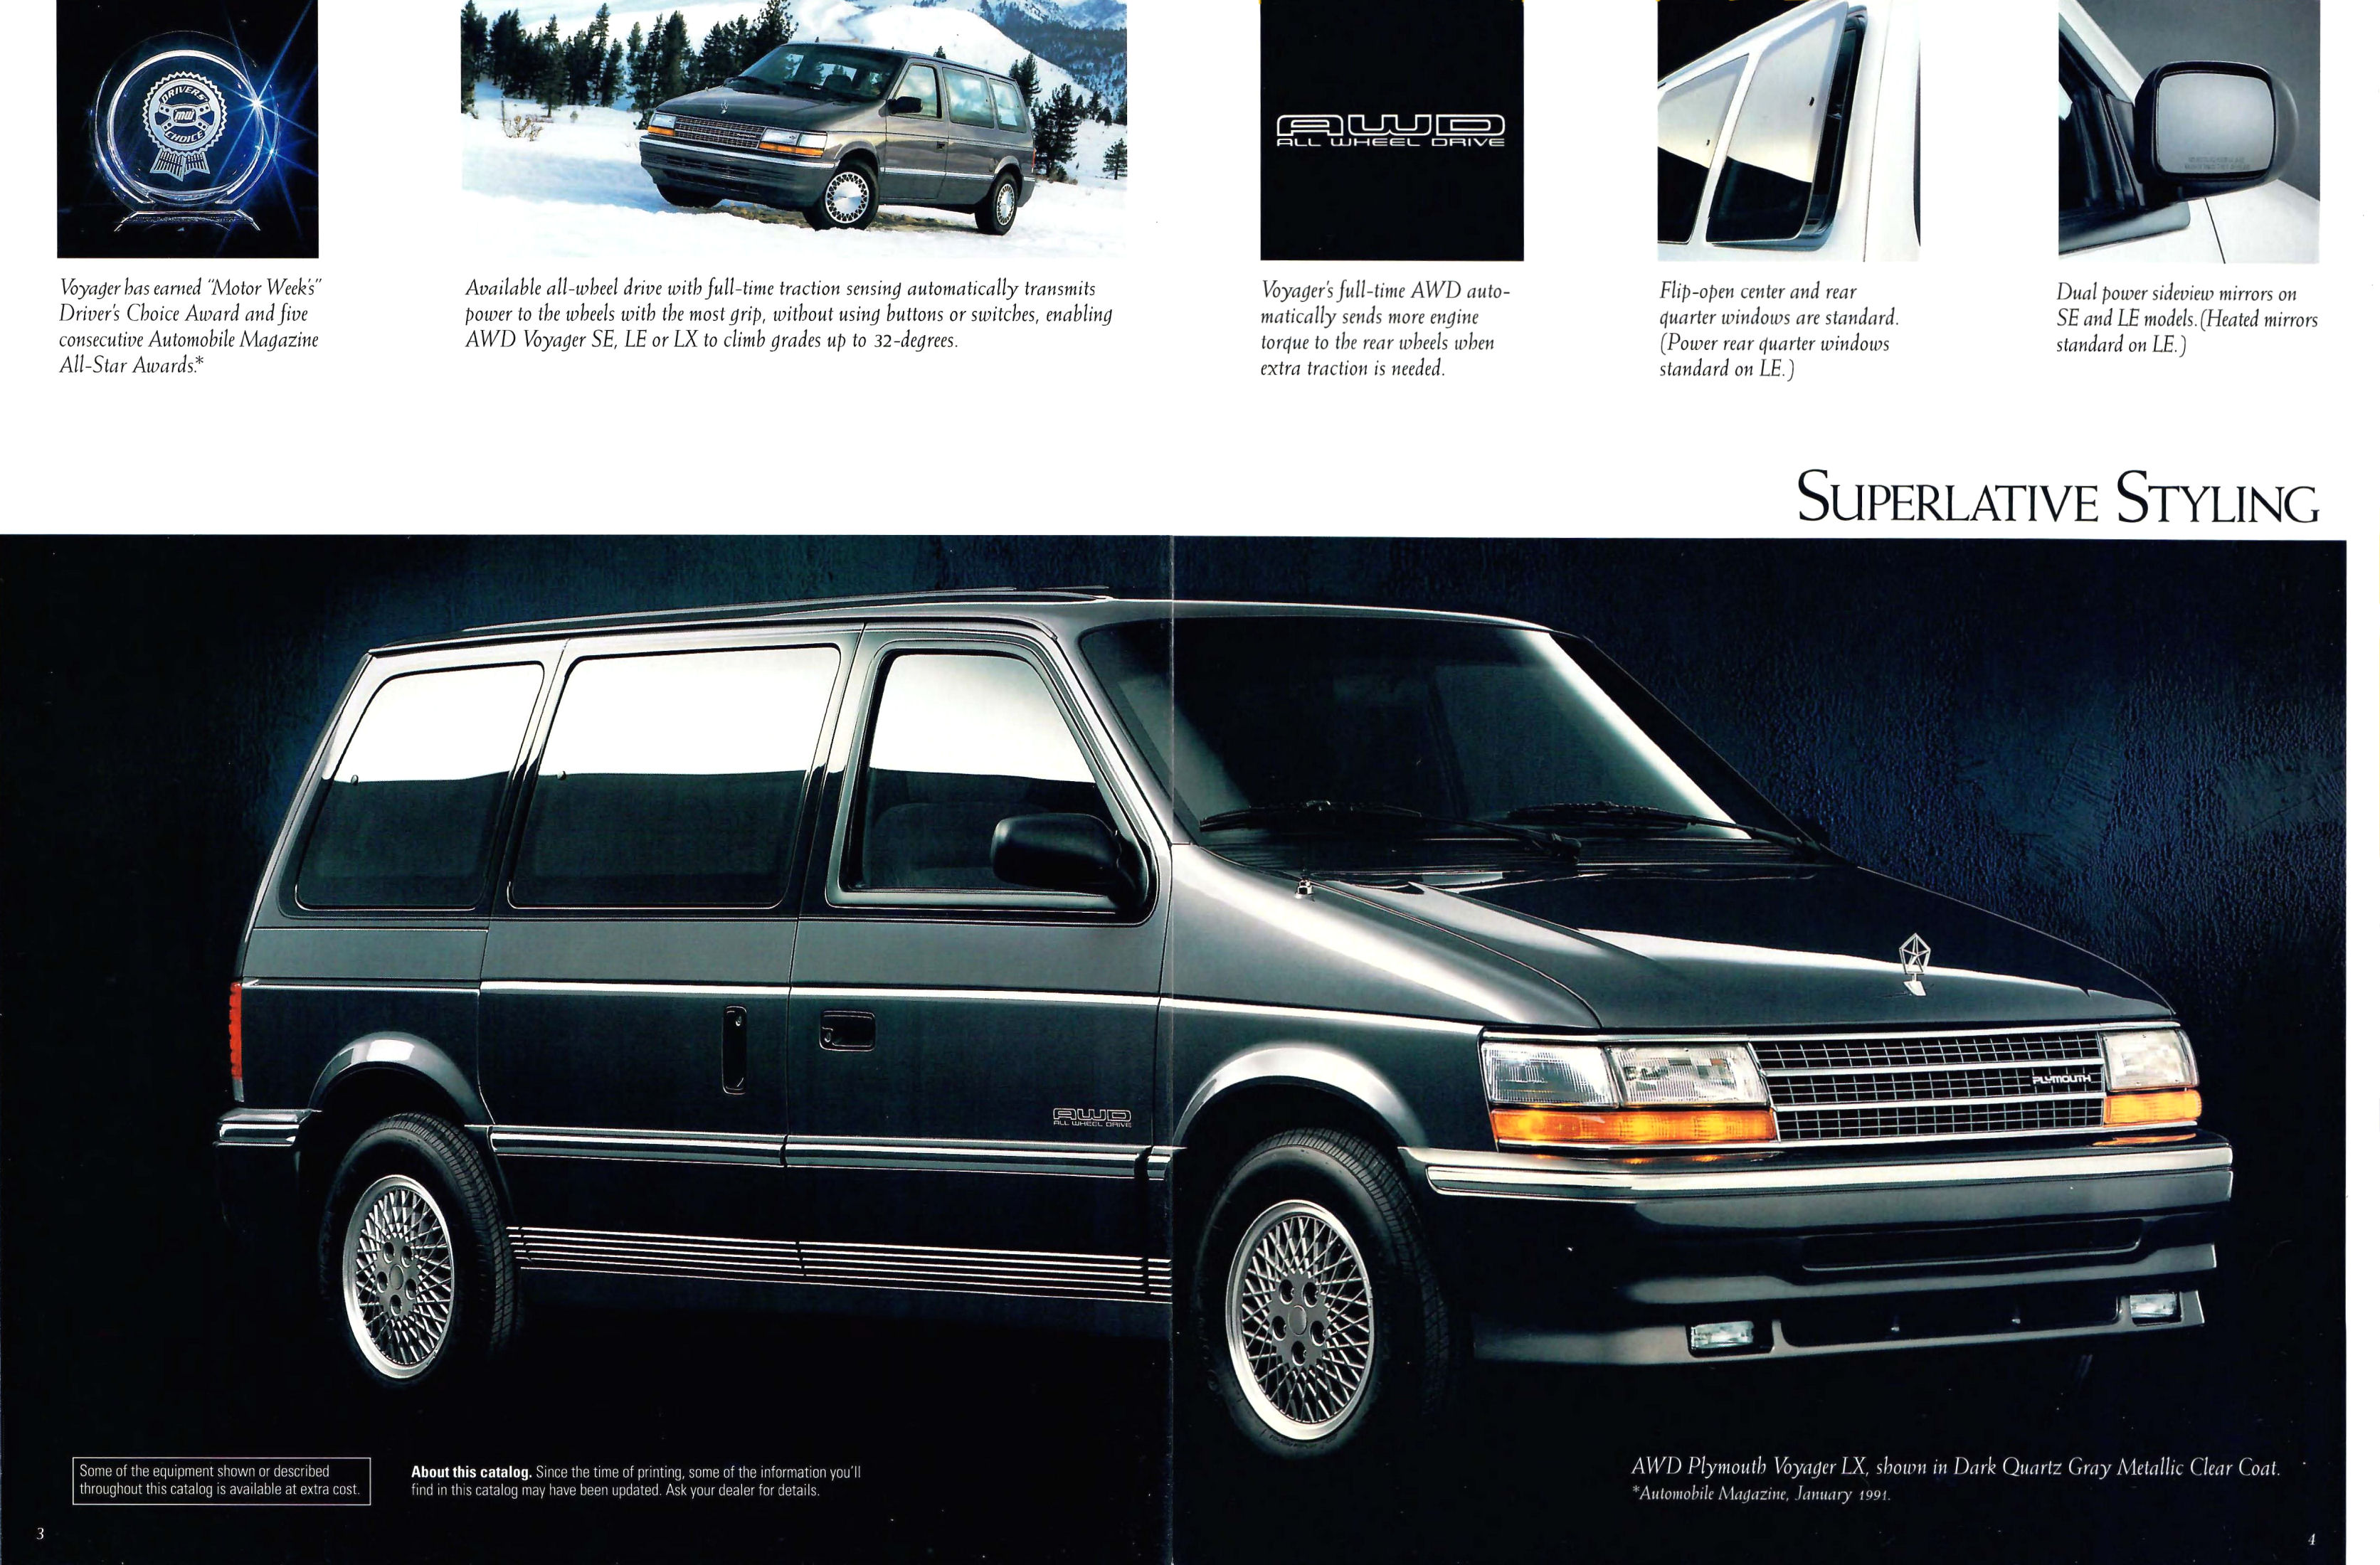 1992 Chrysler-Plymouth Minvans-03-04